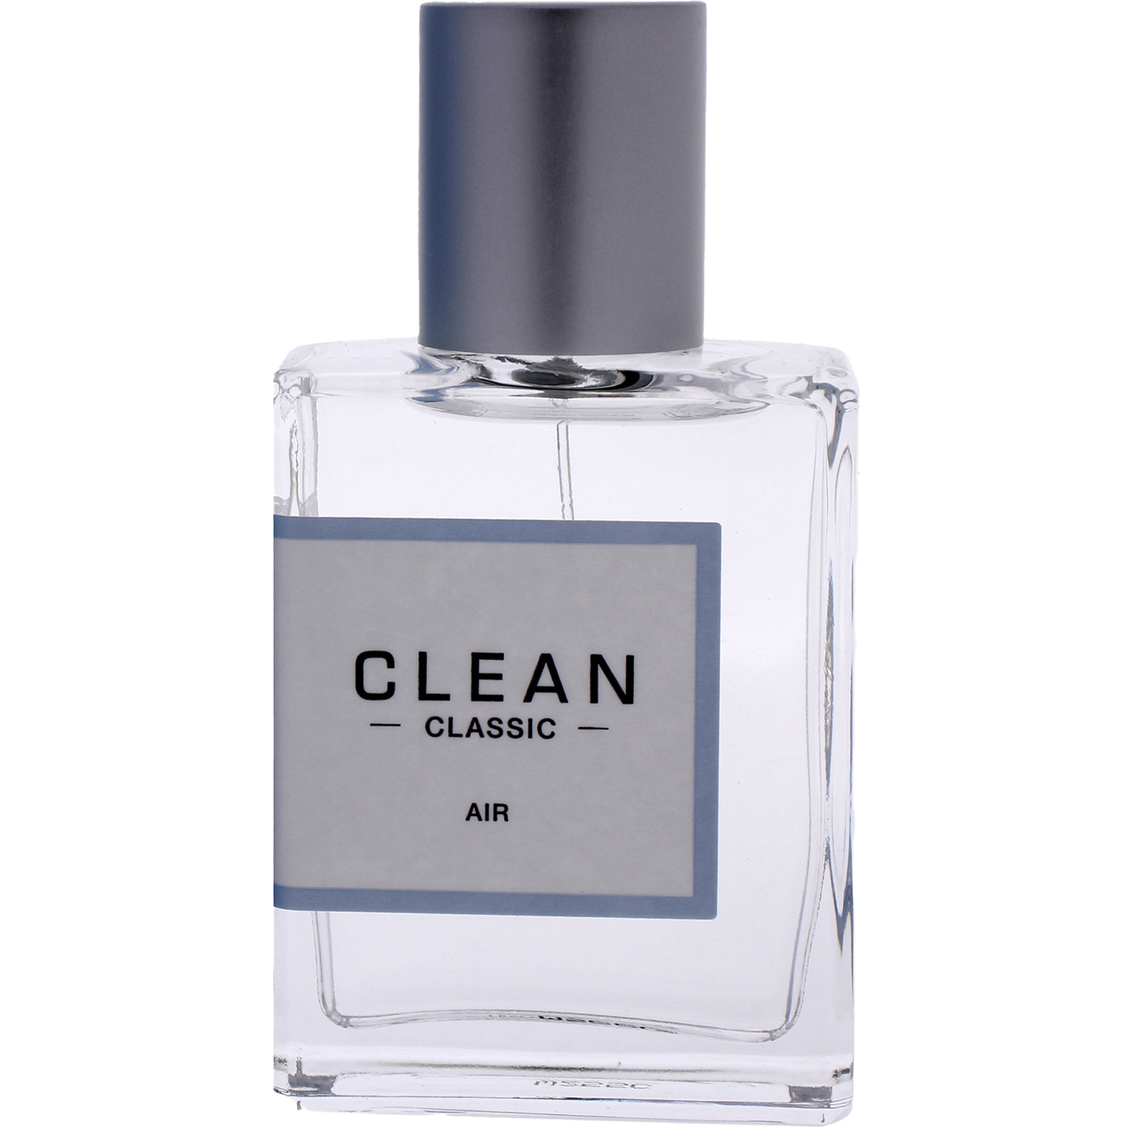 Classic Air by Clean for Women Eau de Parfum Spray 1 oz.